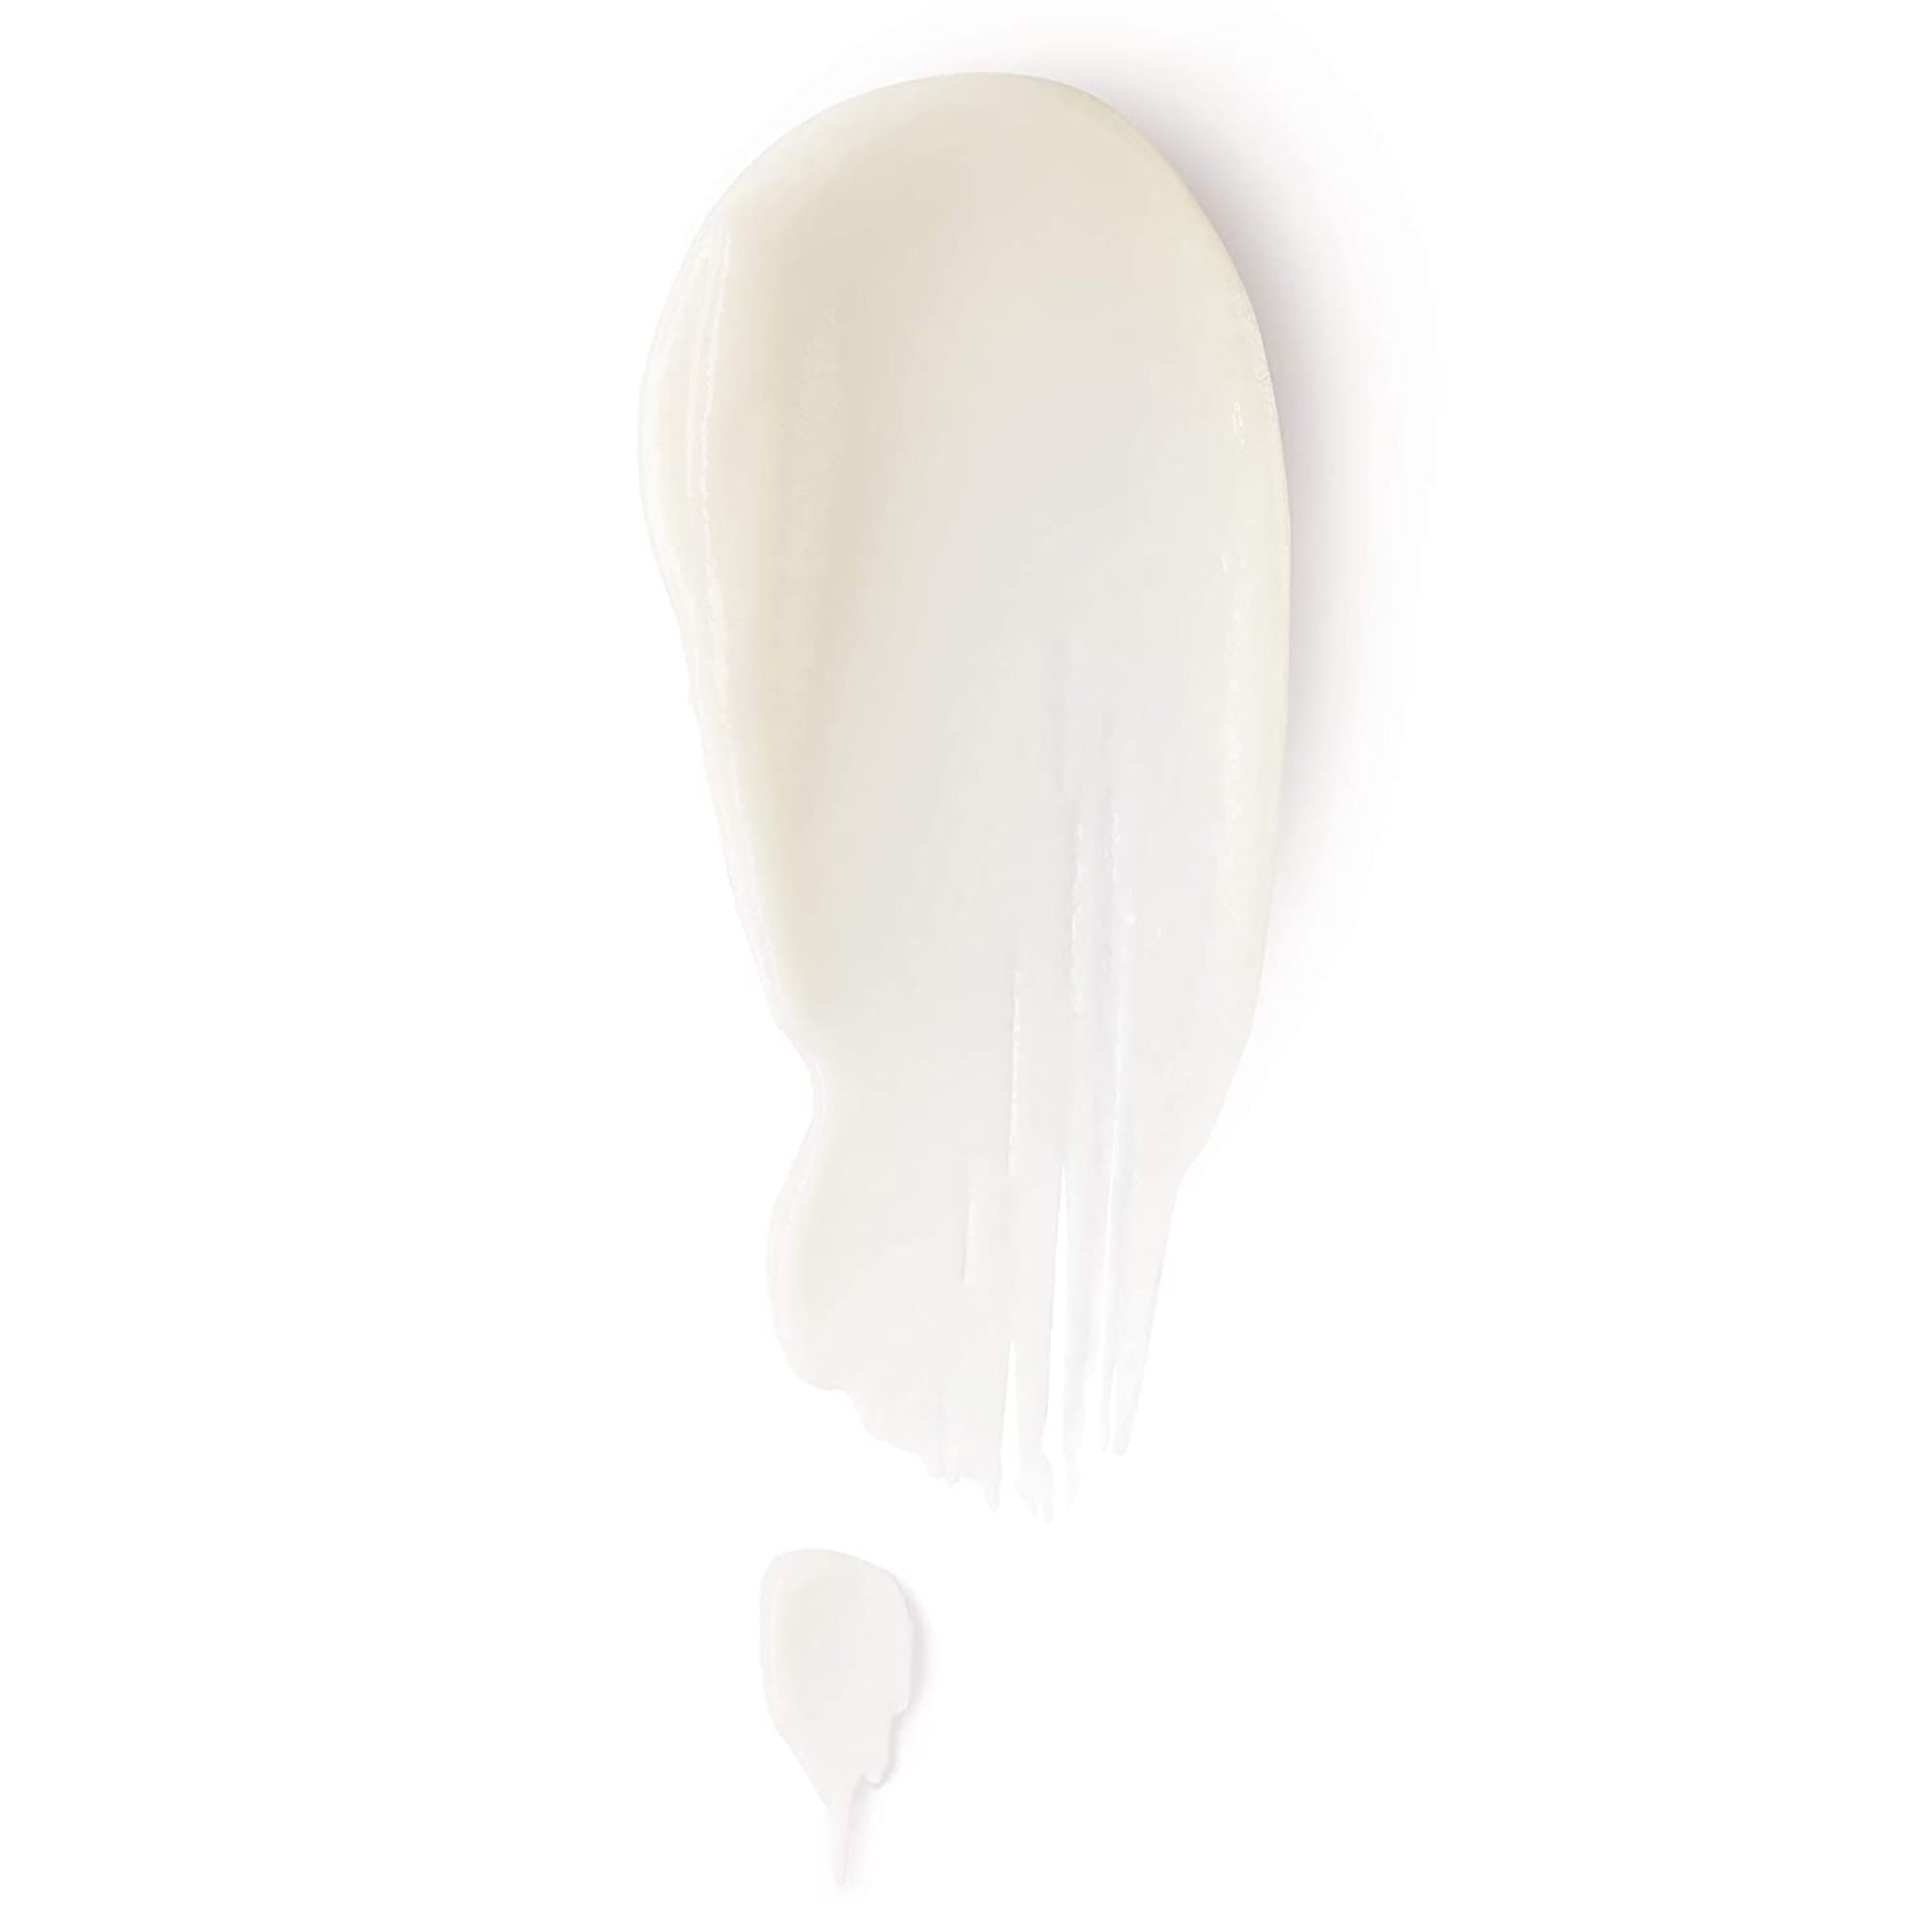 Caudalie VinoClean Gentle Buffing Cream / 2OZ